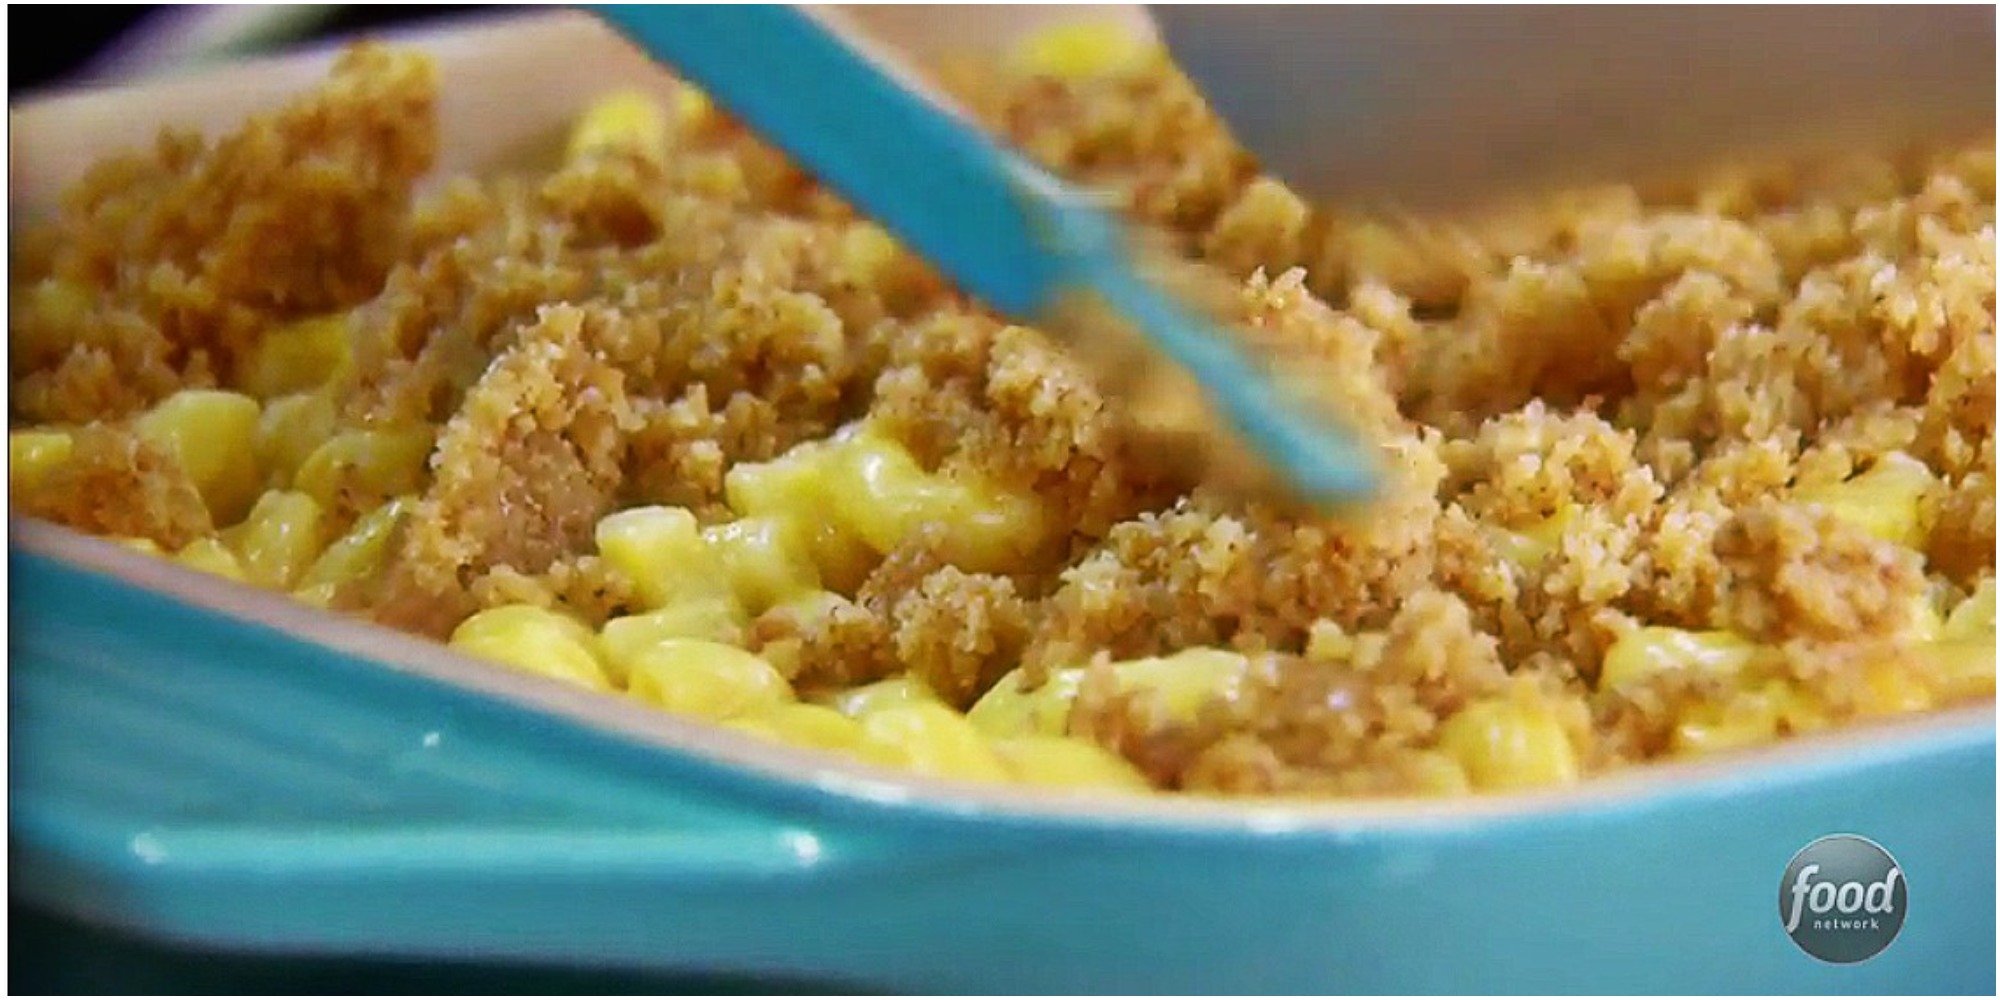 Trisha Yearwood's recipe for mac and cheese featured on "Trisha's Southern Kitchen."